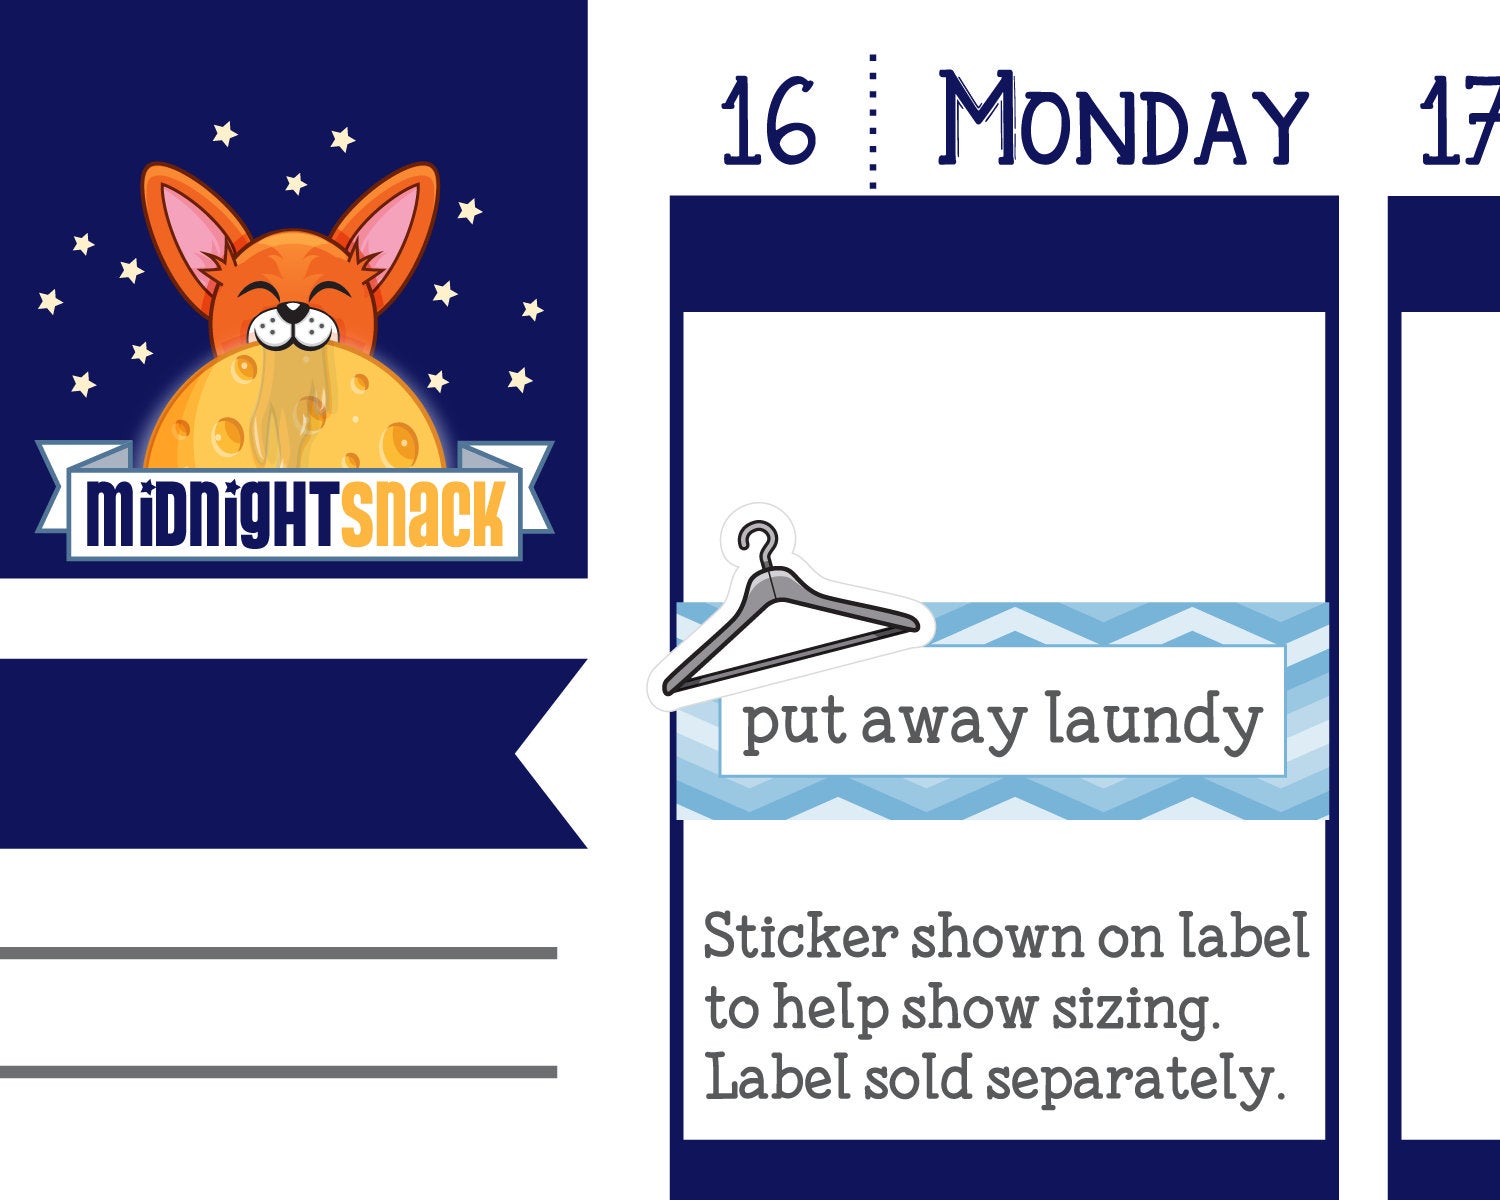 Clothes Hanger Icon: Laundry Planner Sticker Midnight Snack Planner